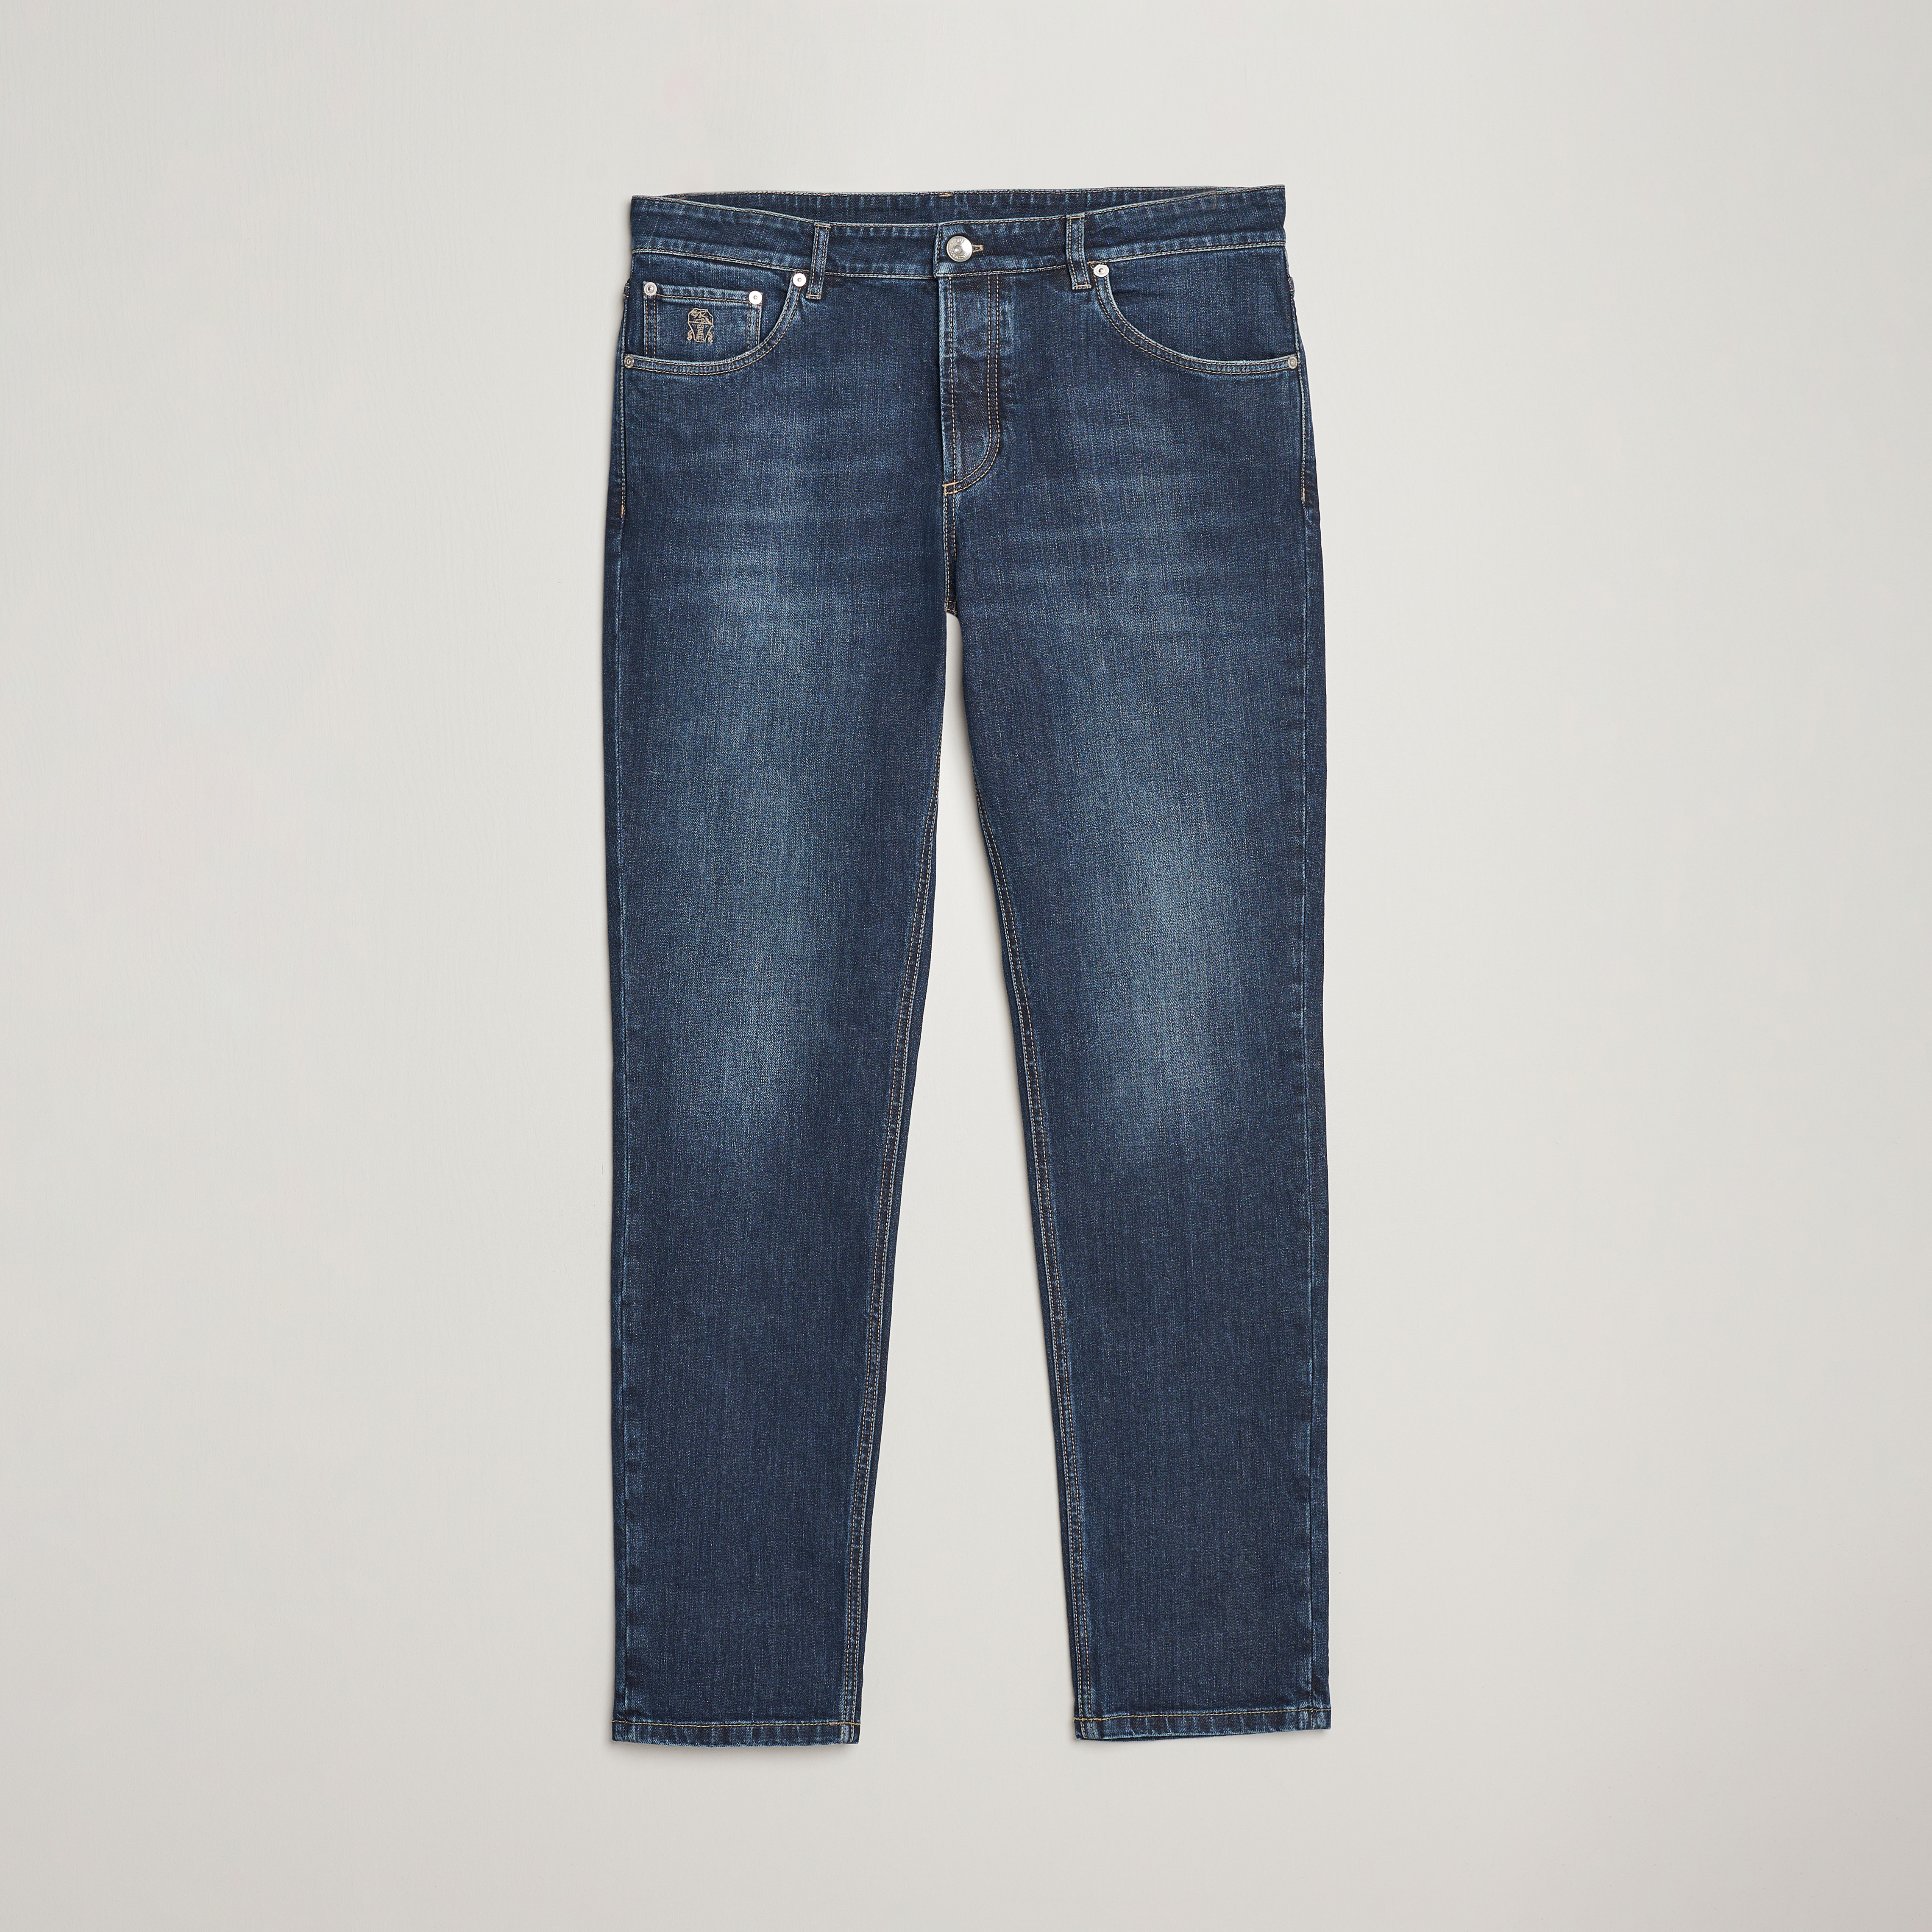 Slim-fit jeans in dark-blue Italian lightweight denim